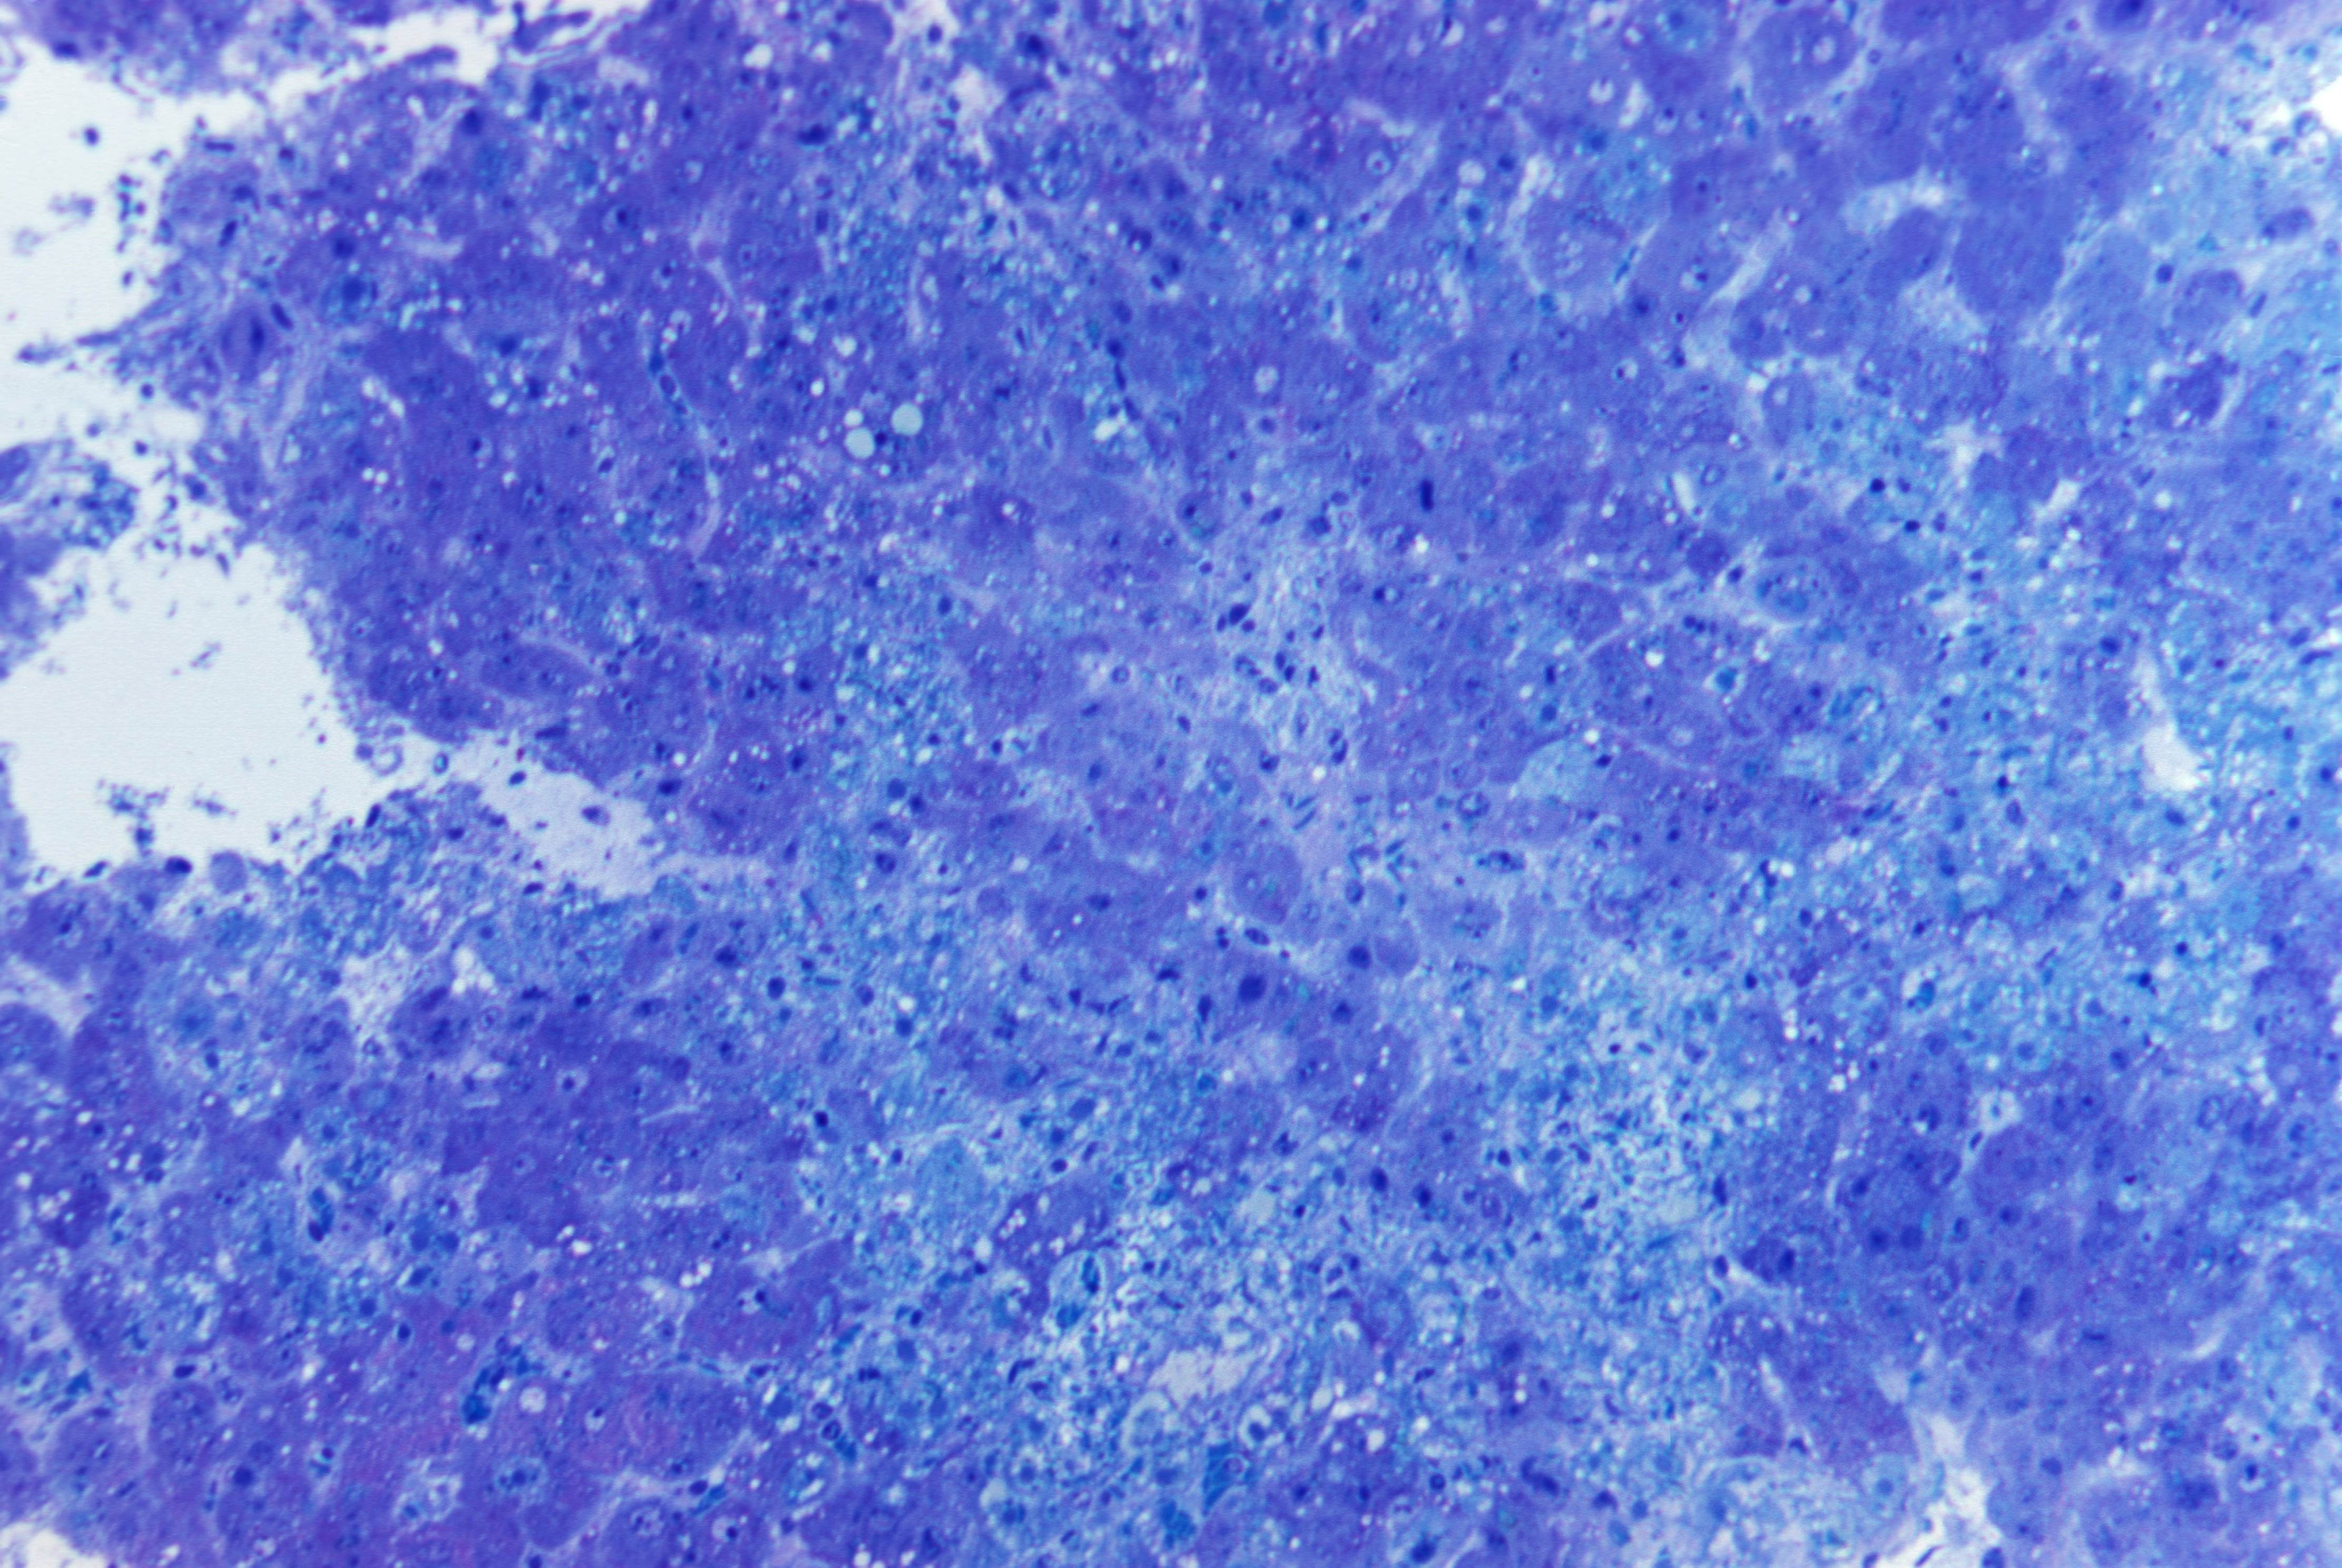 Lassa hemorrhagic fever Lassa virus free image, public domain image